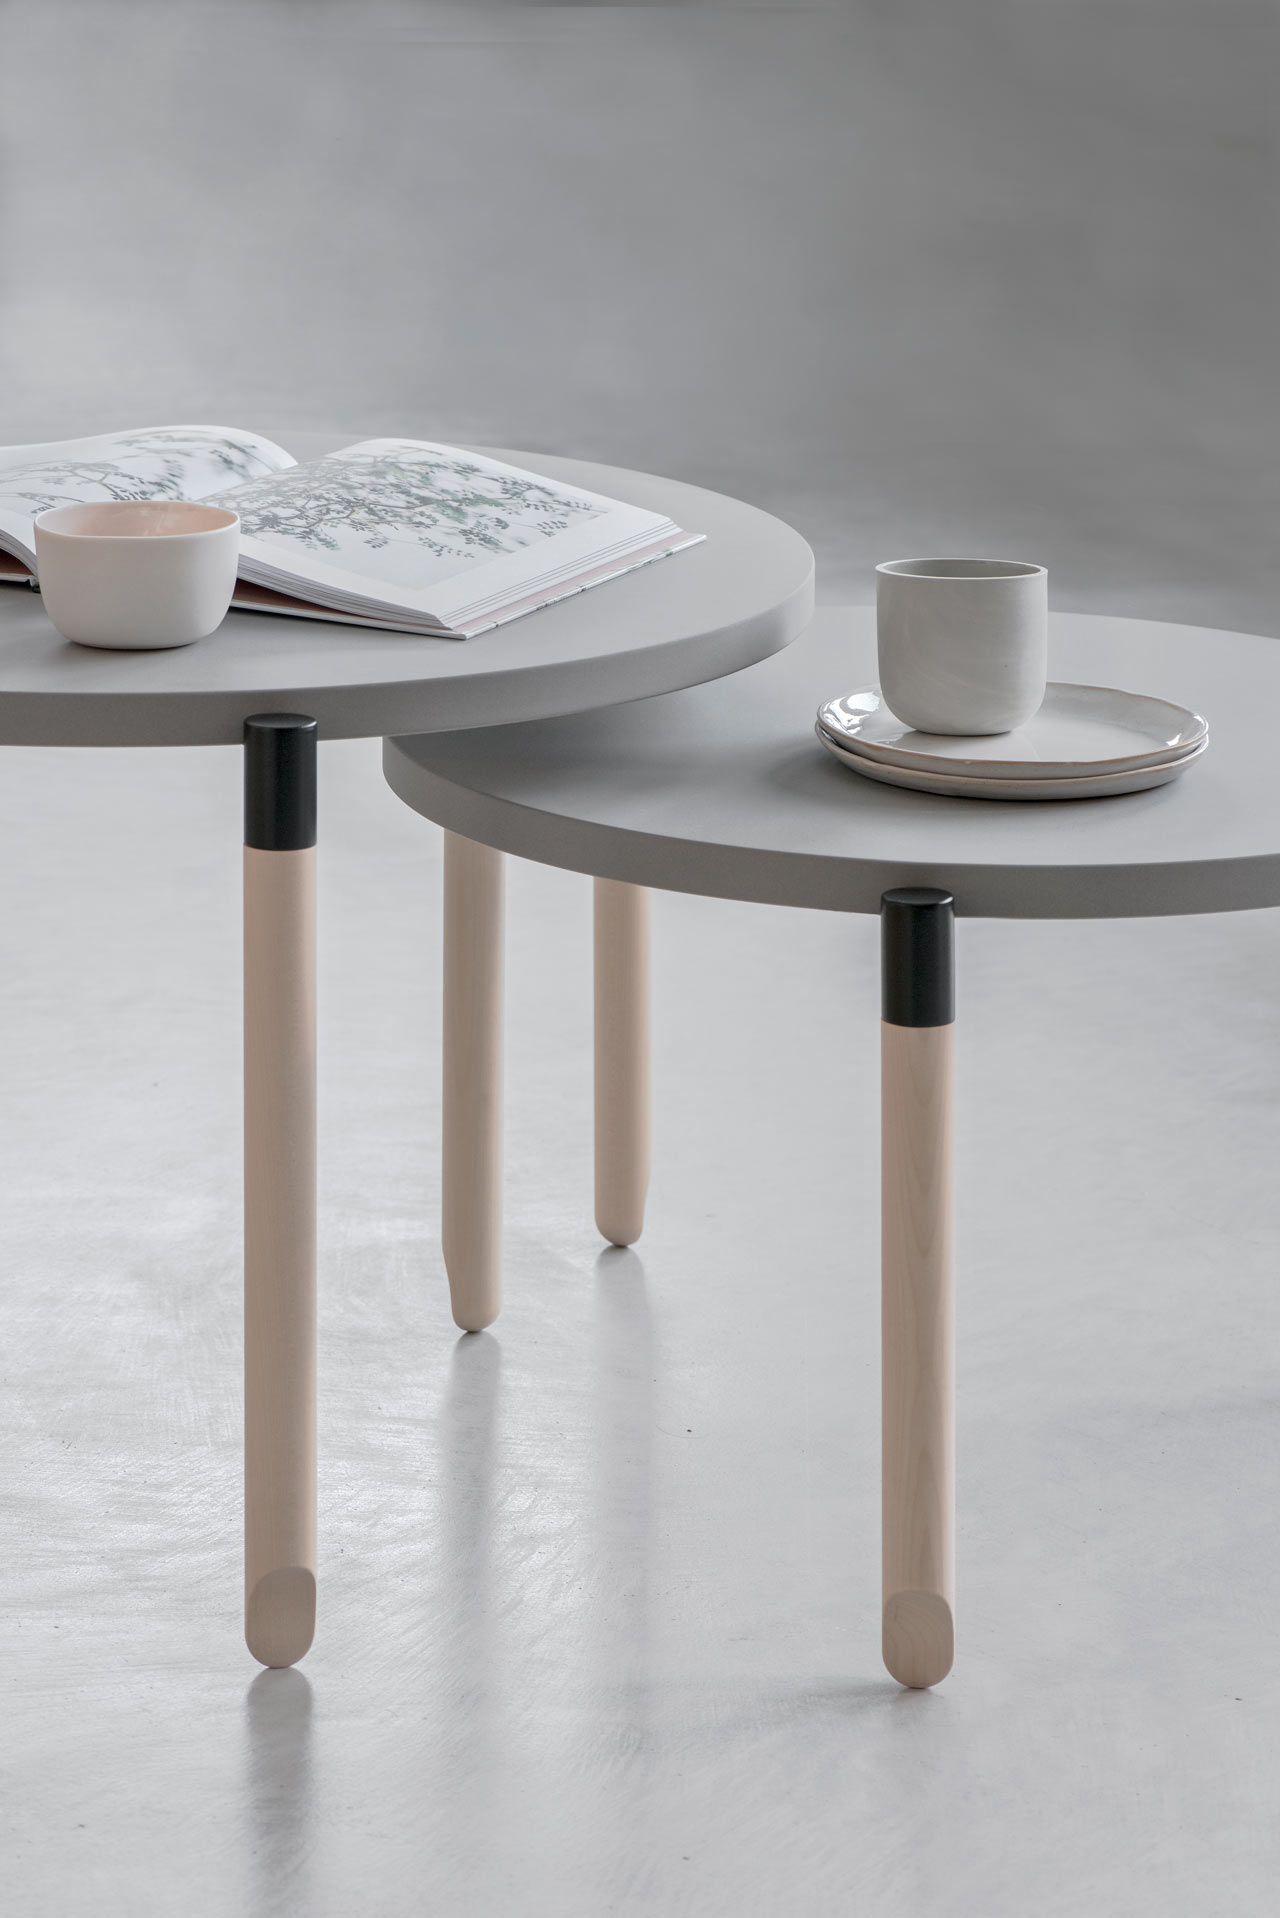 Coffee Tables with Legs Like Ballerina Feet